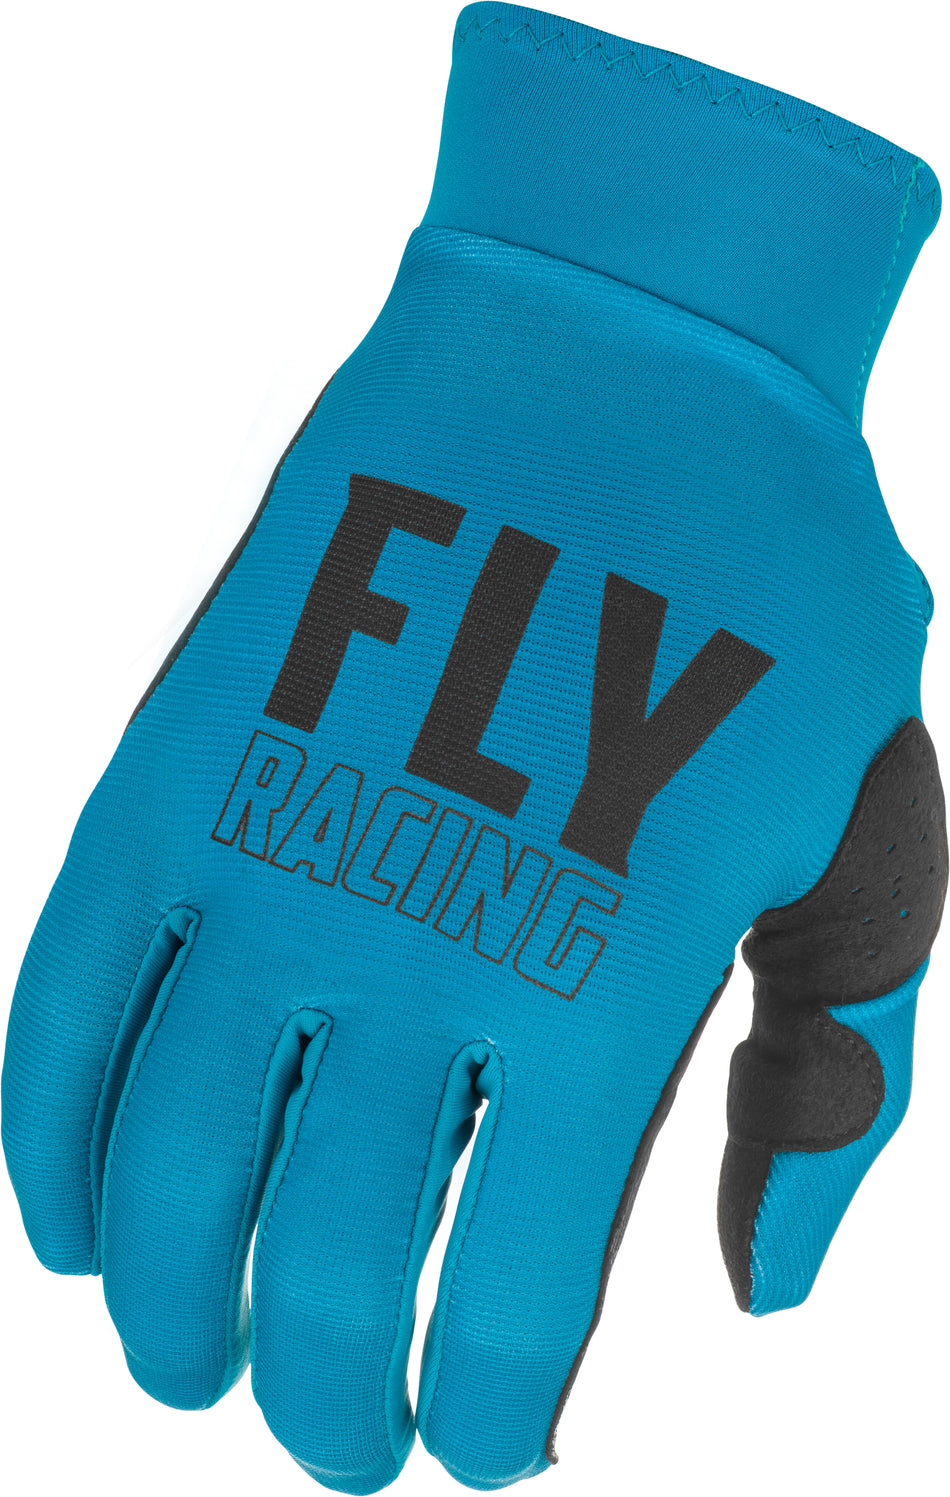 FLY RACING Pro Lite Gloves Blue/Black Sz 08 374-85108